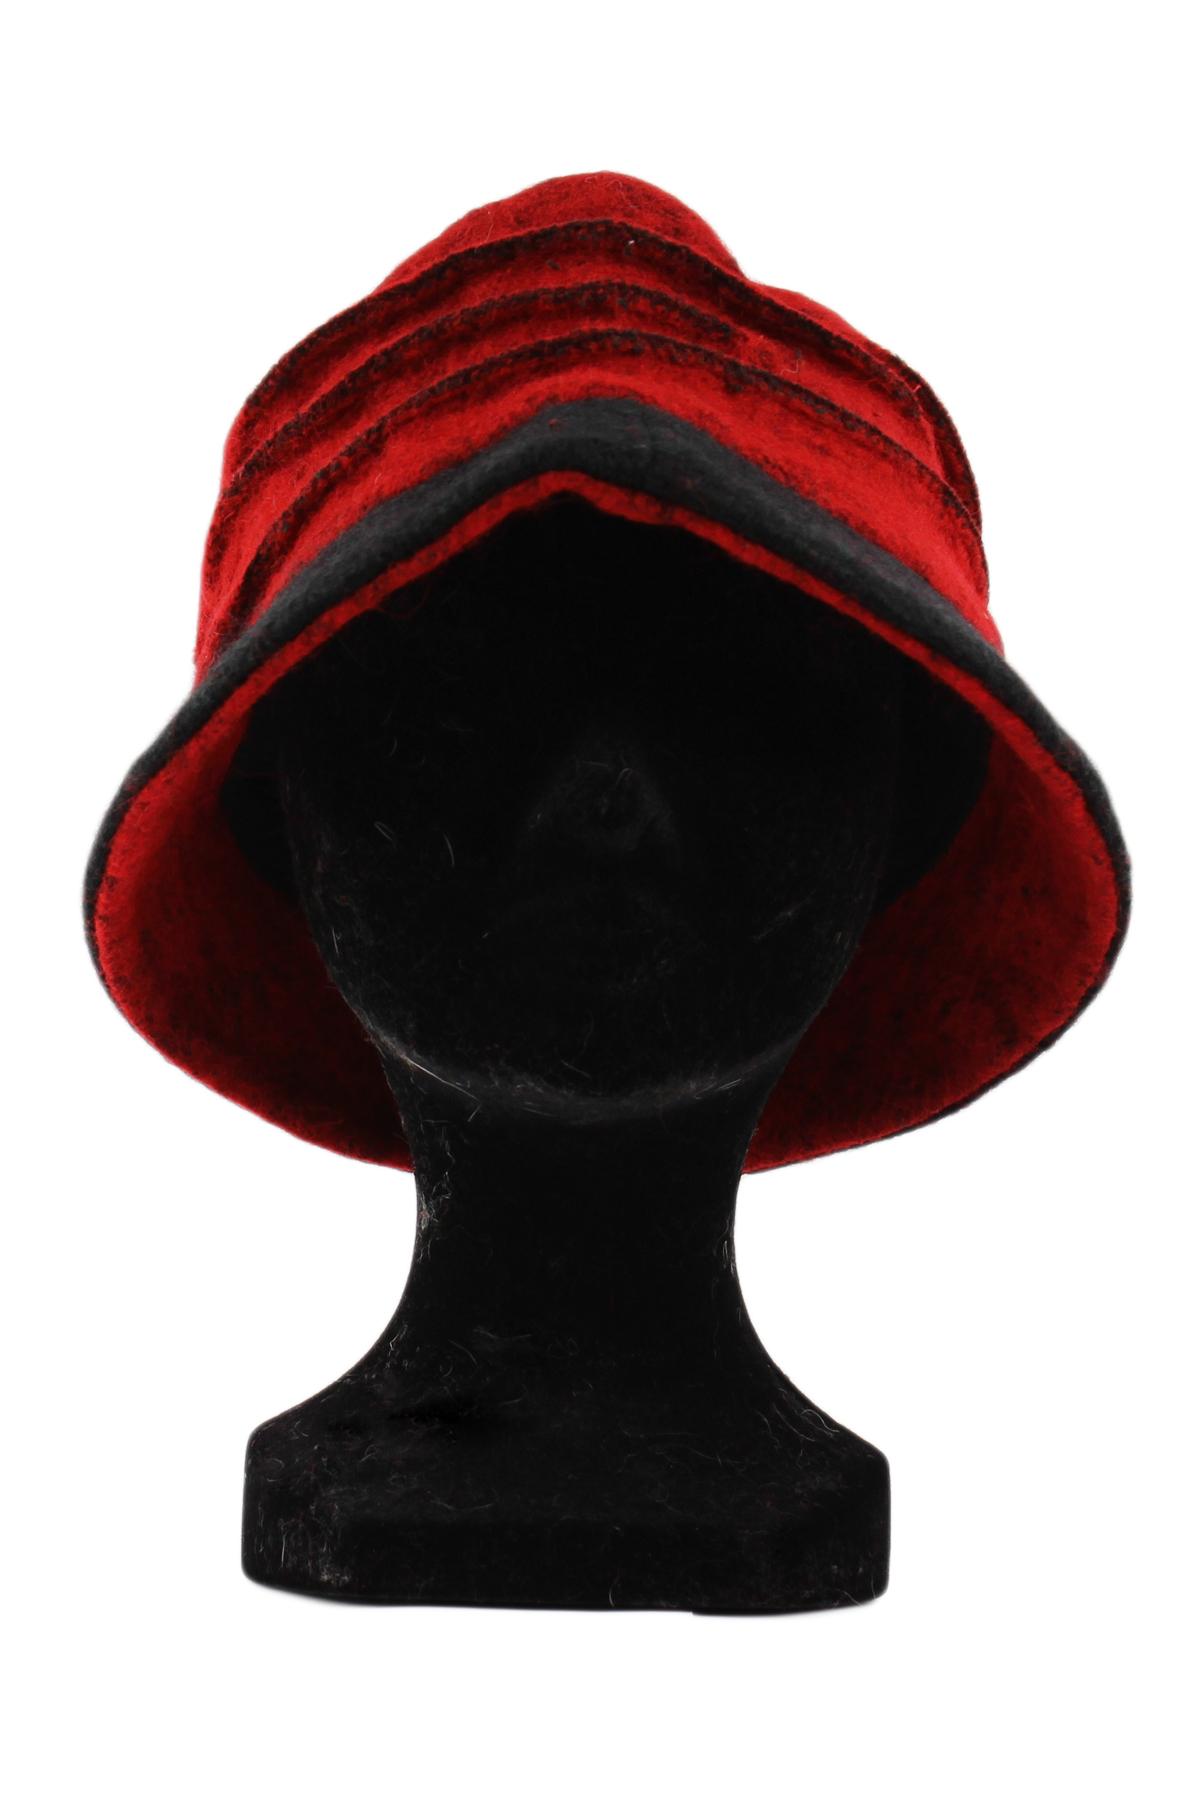 Hats Accessories Red Lil Moon W10-3773 #c Efashion Paris